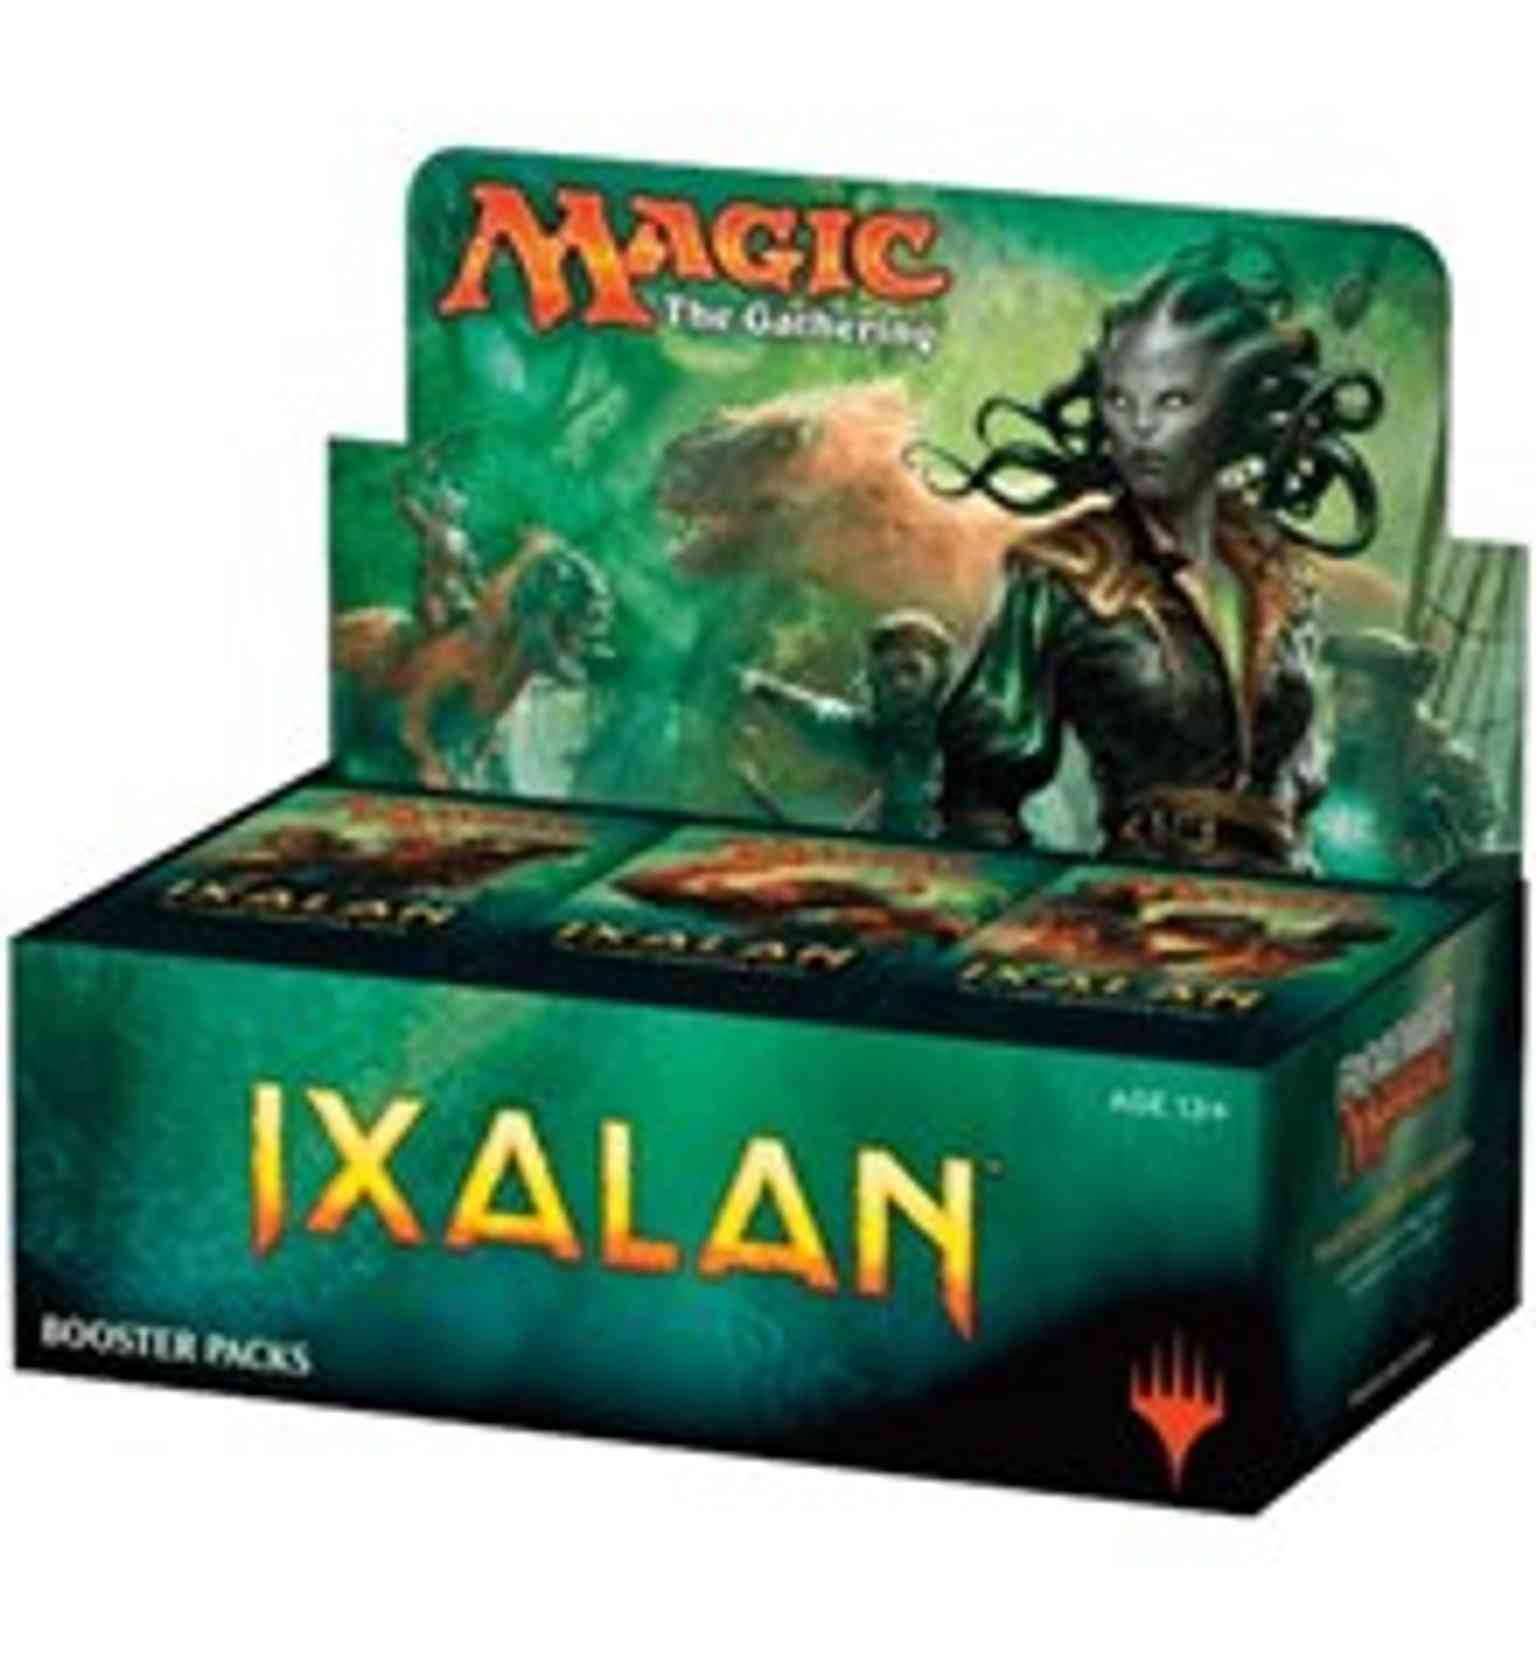 Ixalan - Booster Box magic card front